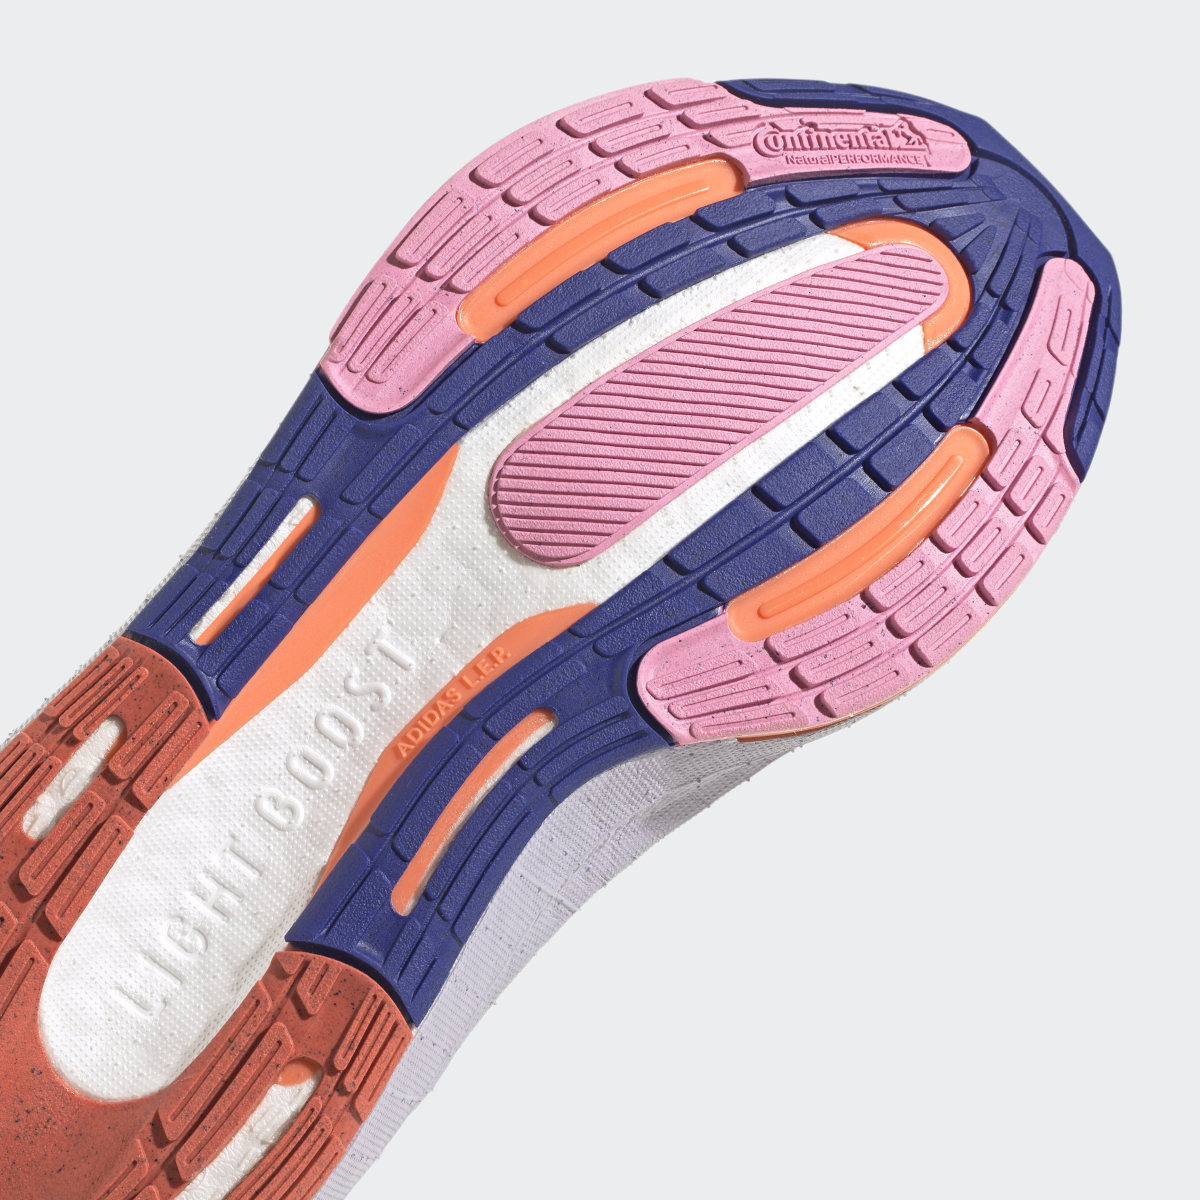 Adidas Ultraboost Light Ayakkabı. 9